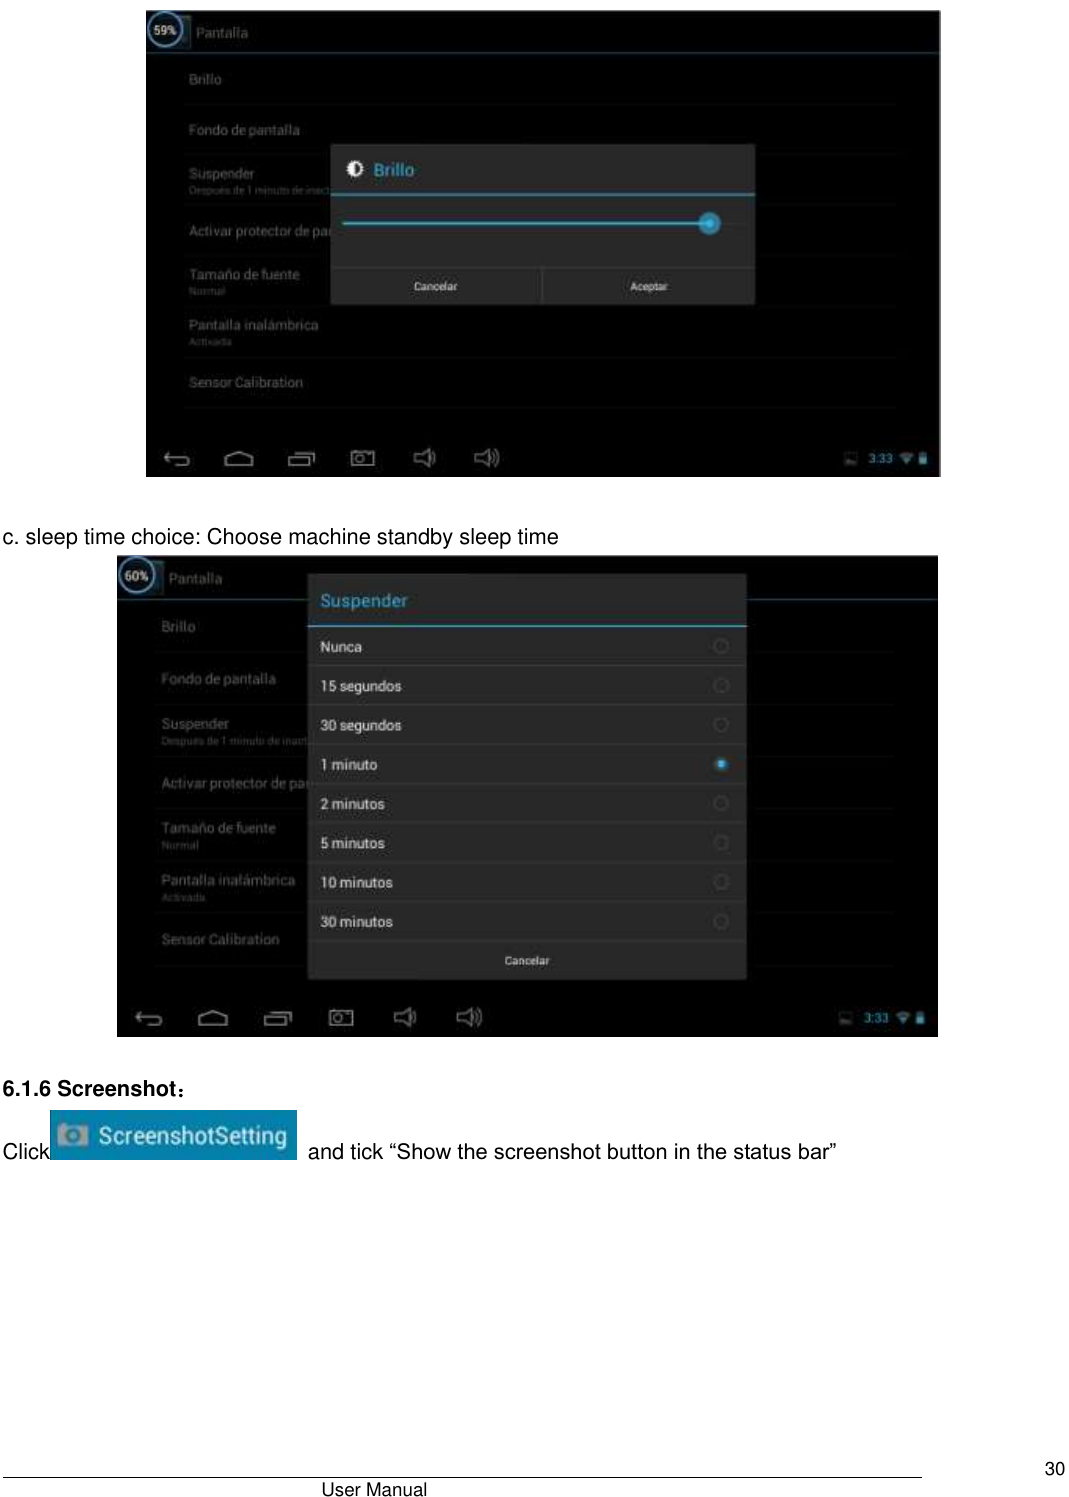                                       User Manual     30   c. sleep time choice: Choose machine standby sleep time     6.1.6 Screenshot： Click   and tick “Show the screenshot button in the status bar”    